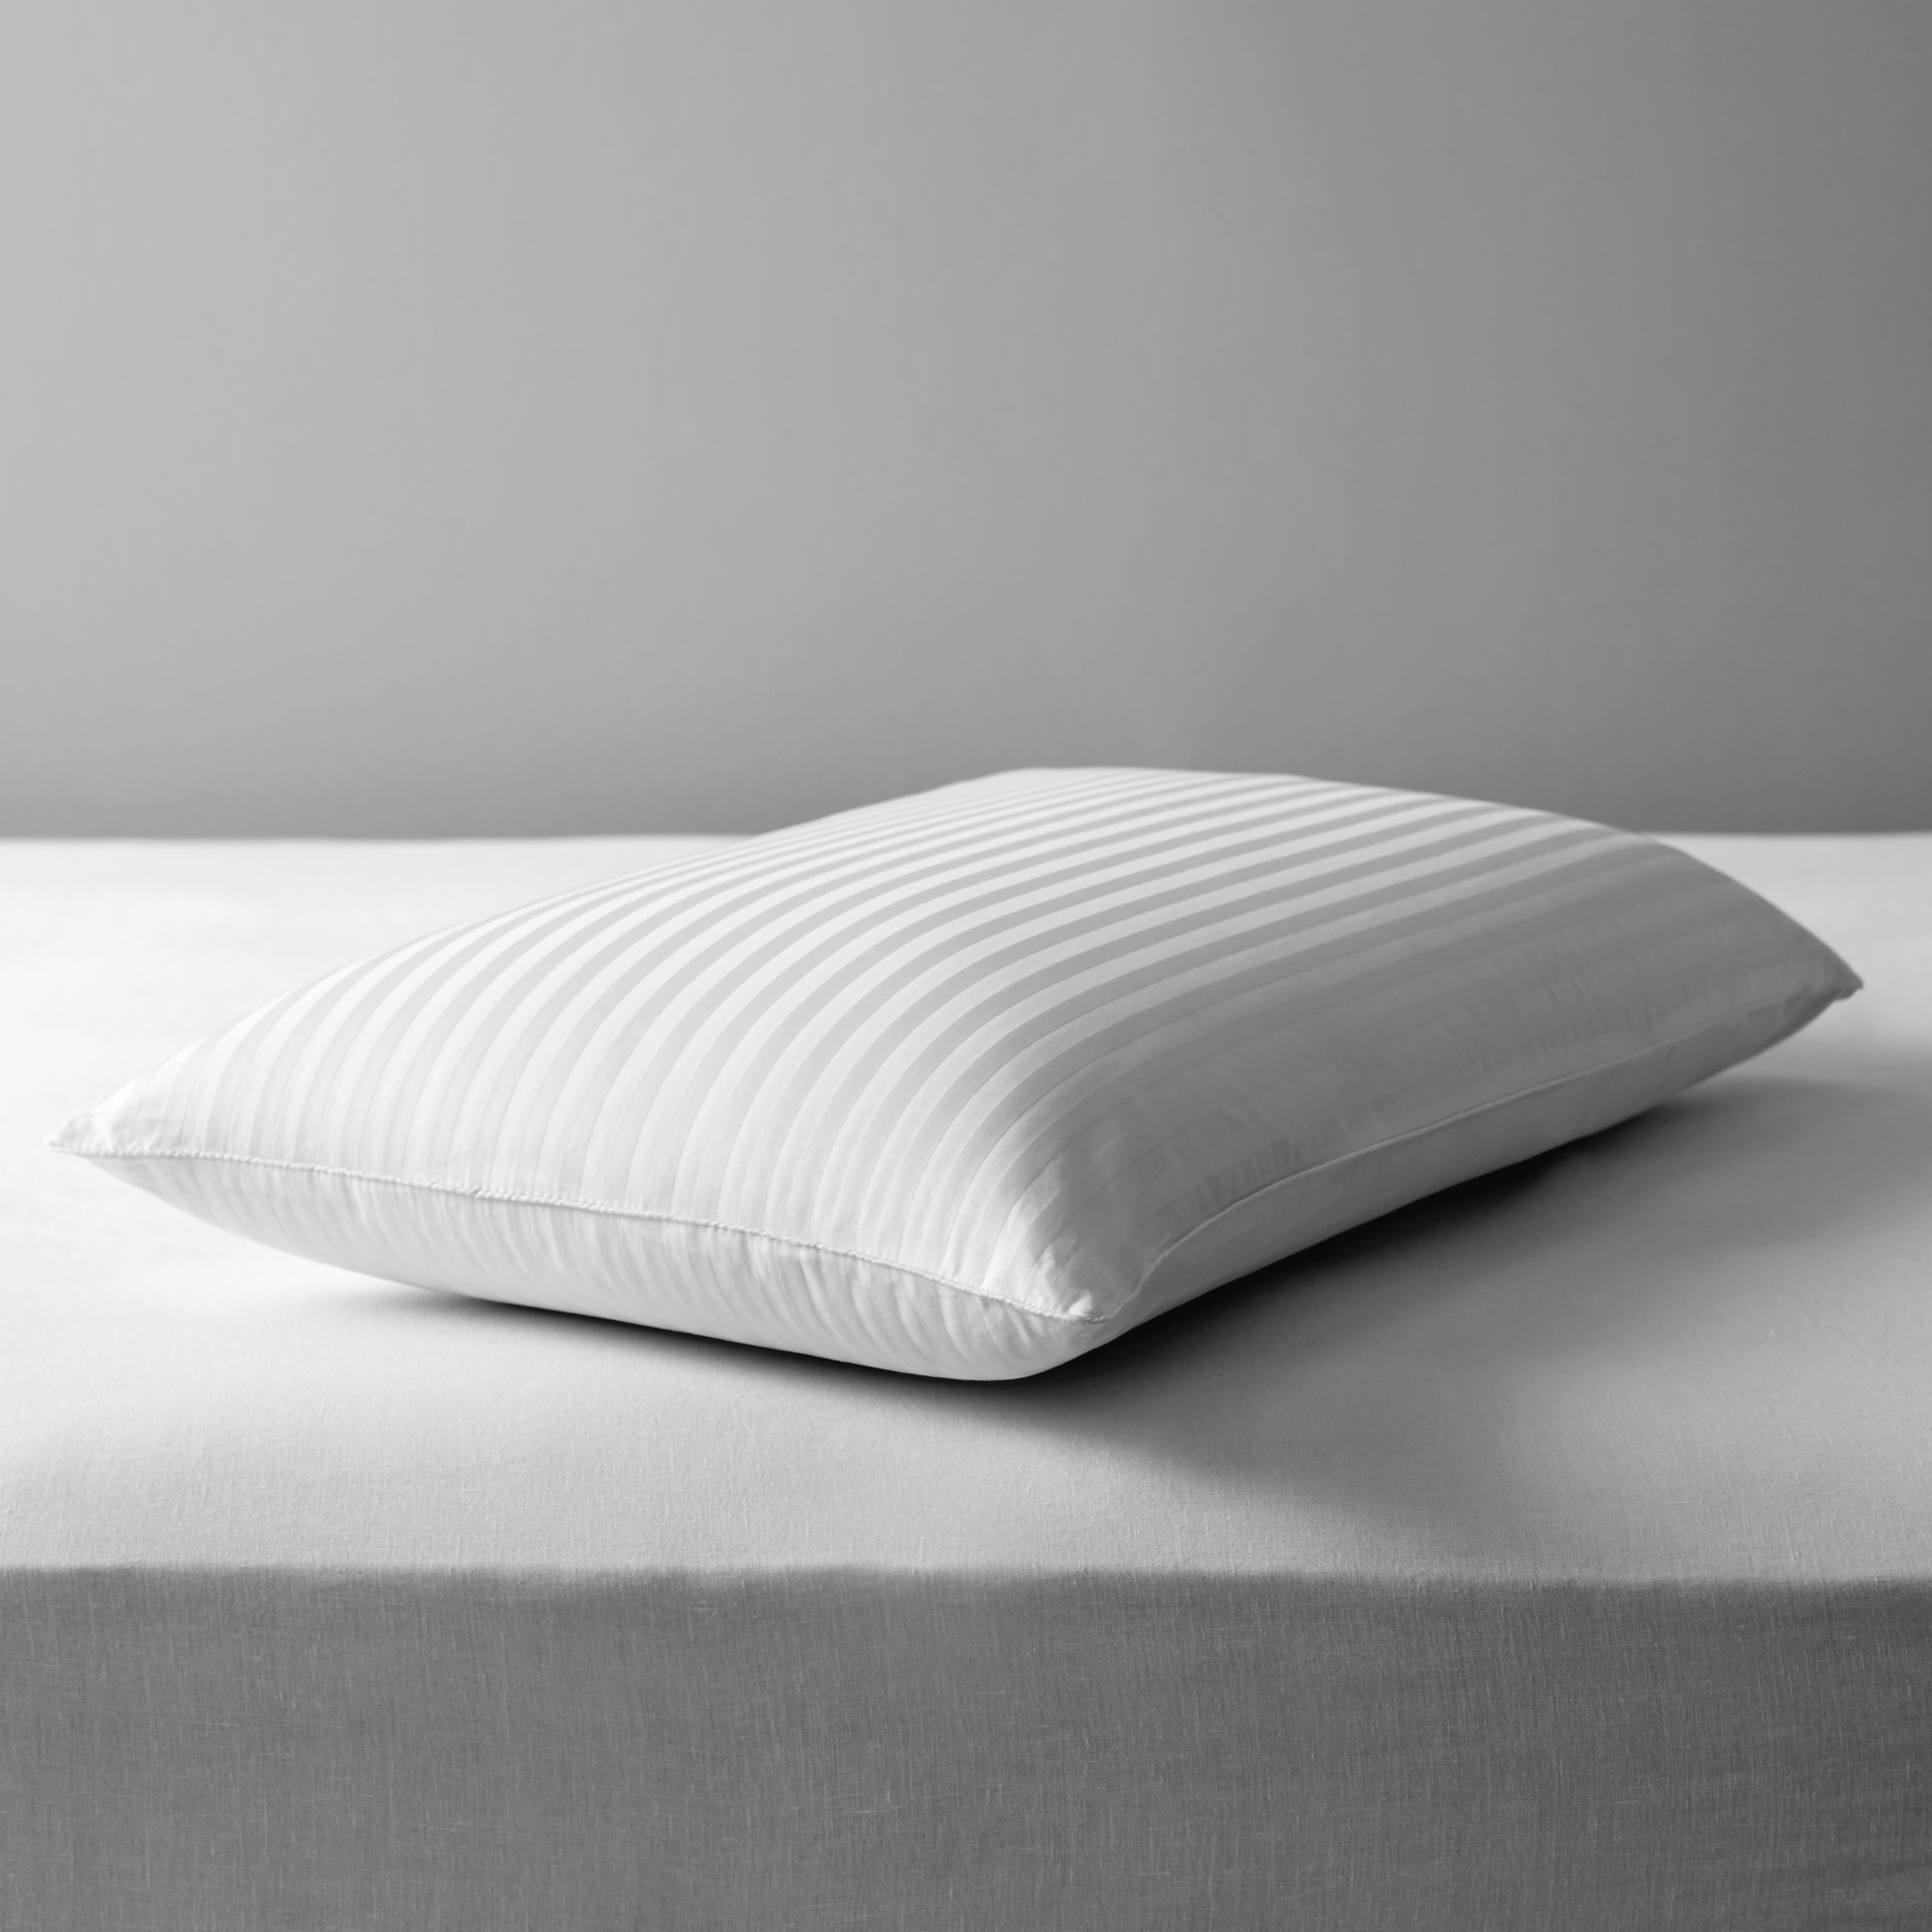 dunlopillo latex rubber pillow